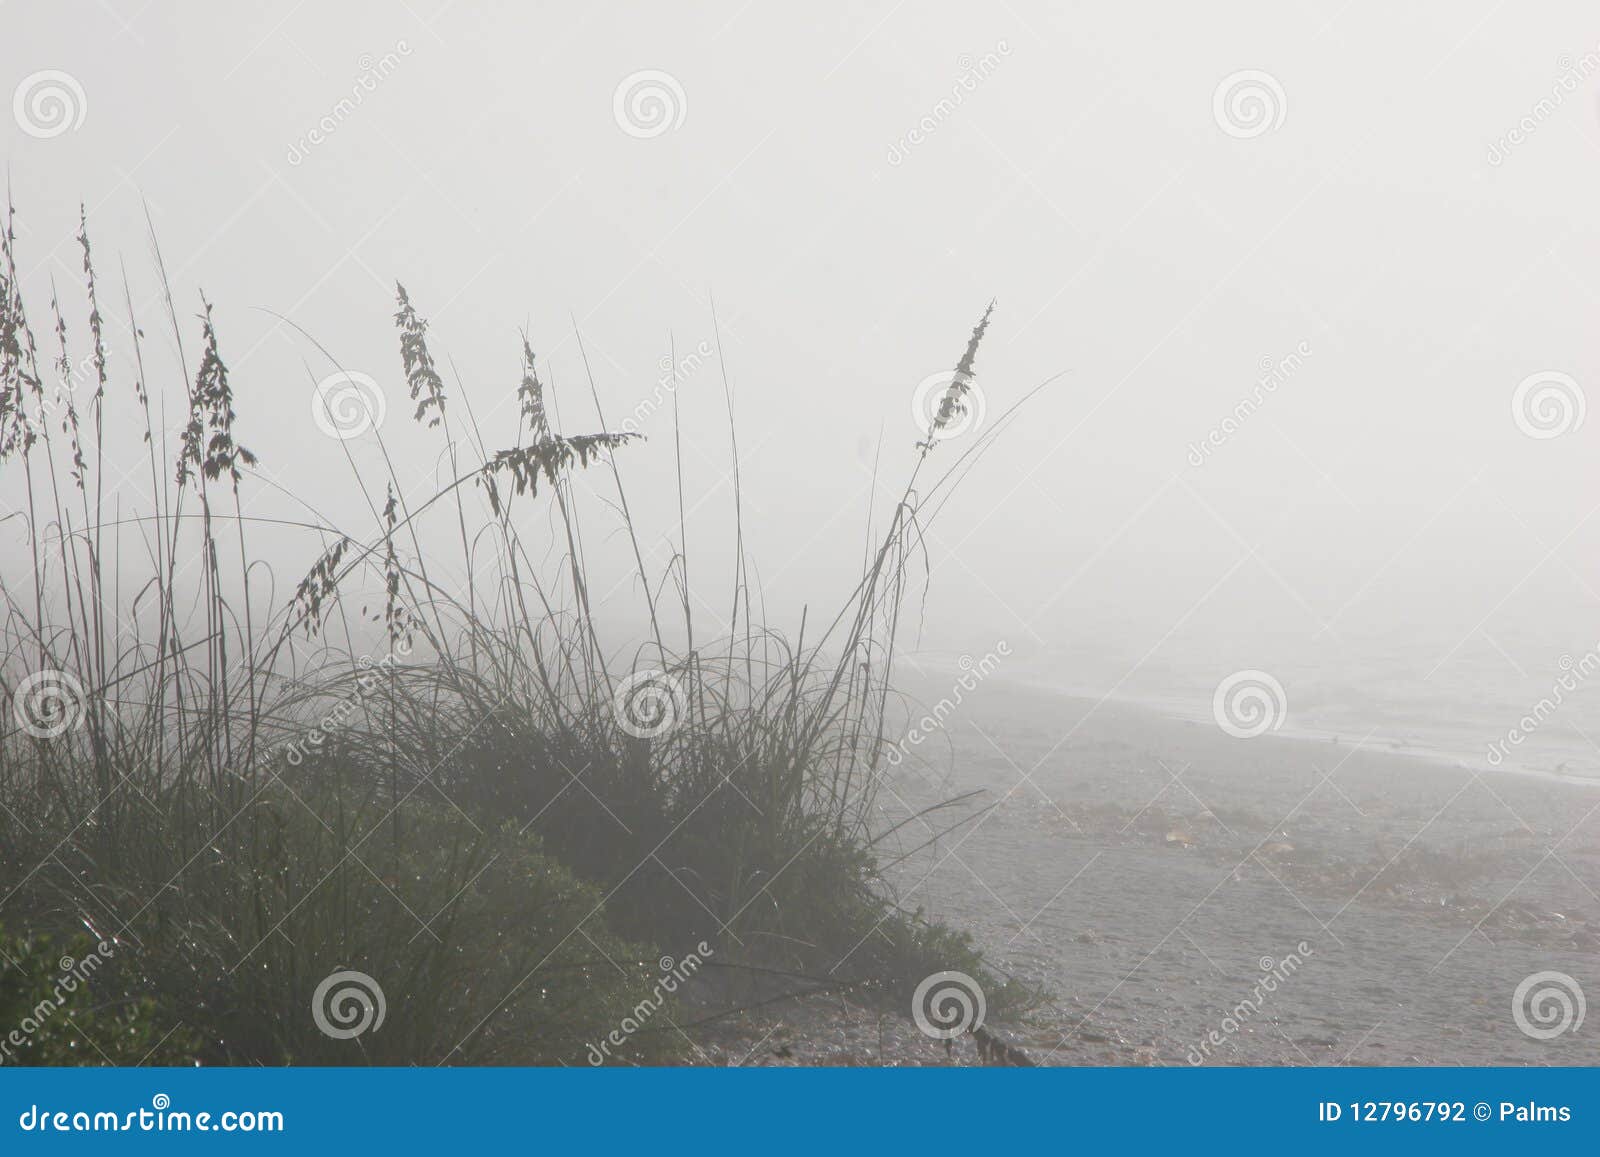 foggy beach